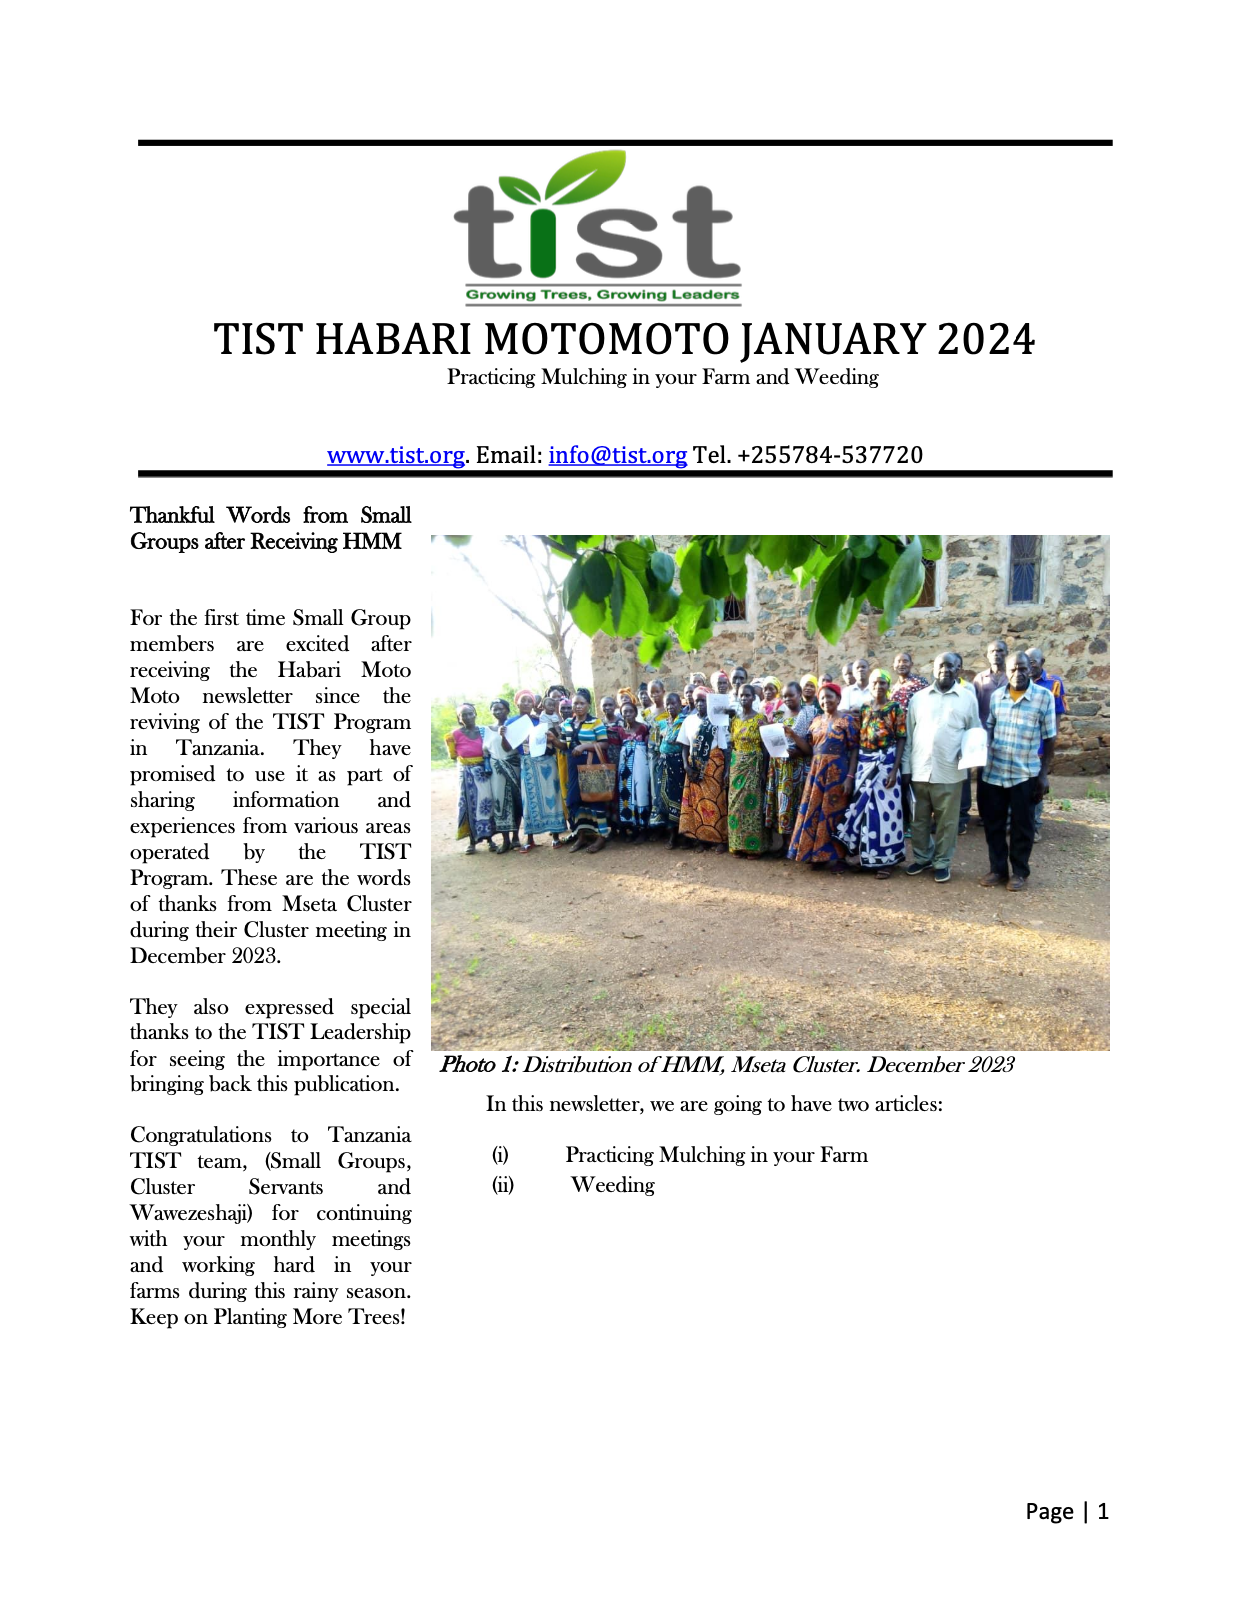 TIST Tanzania Newsletter - January 2024